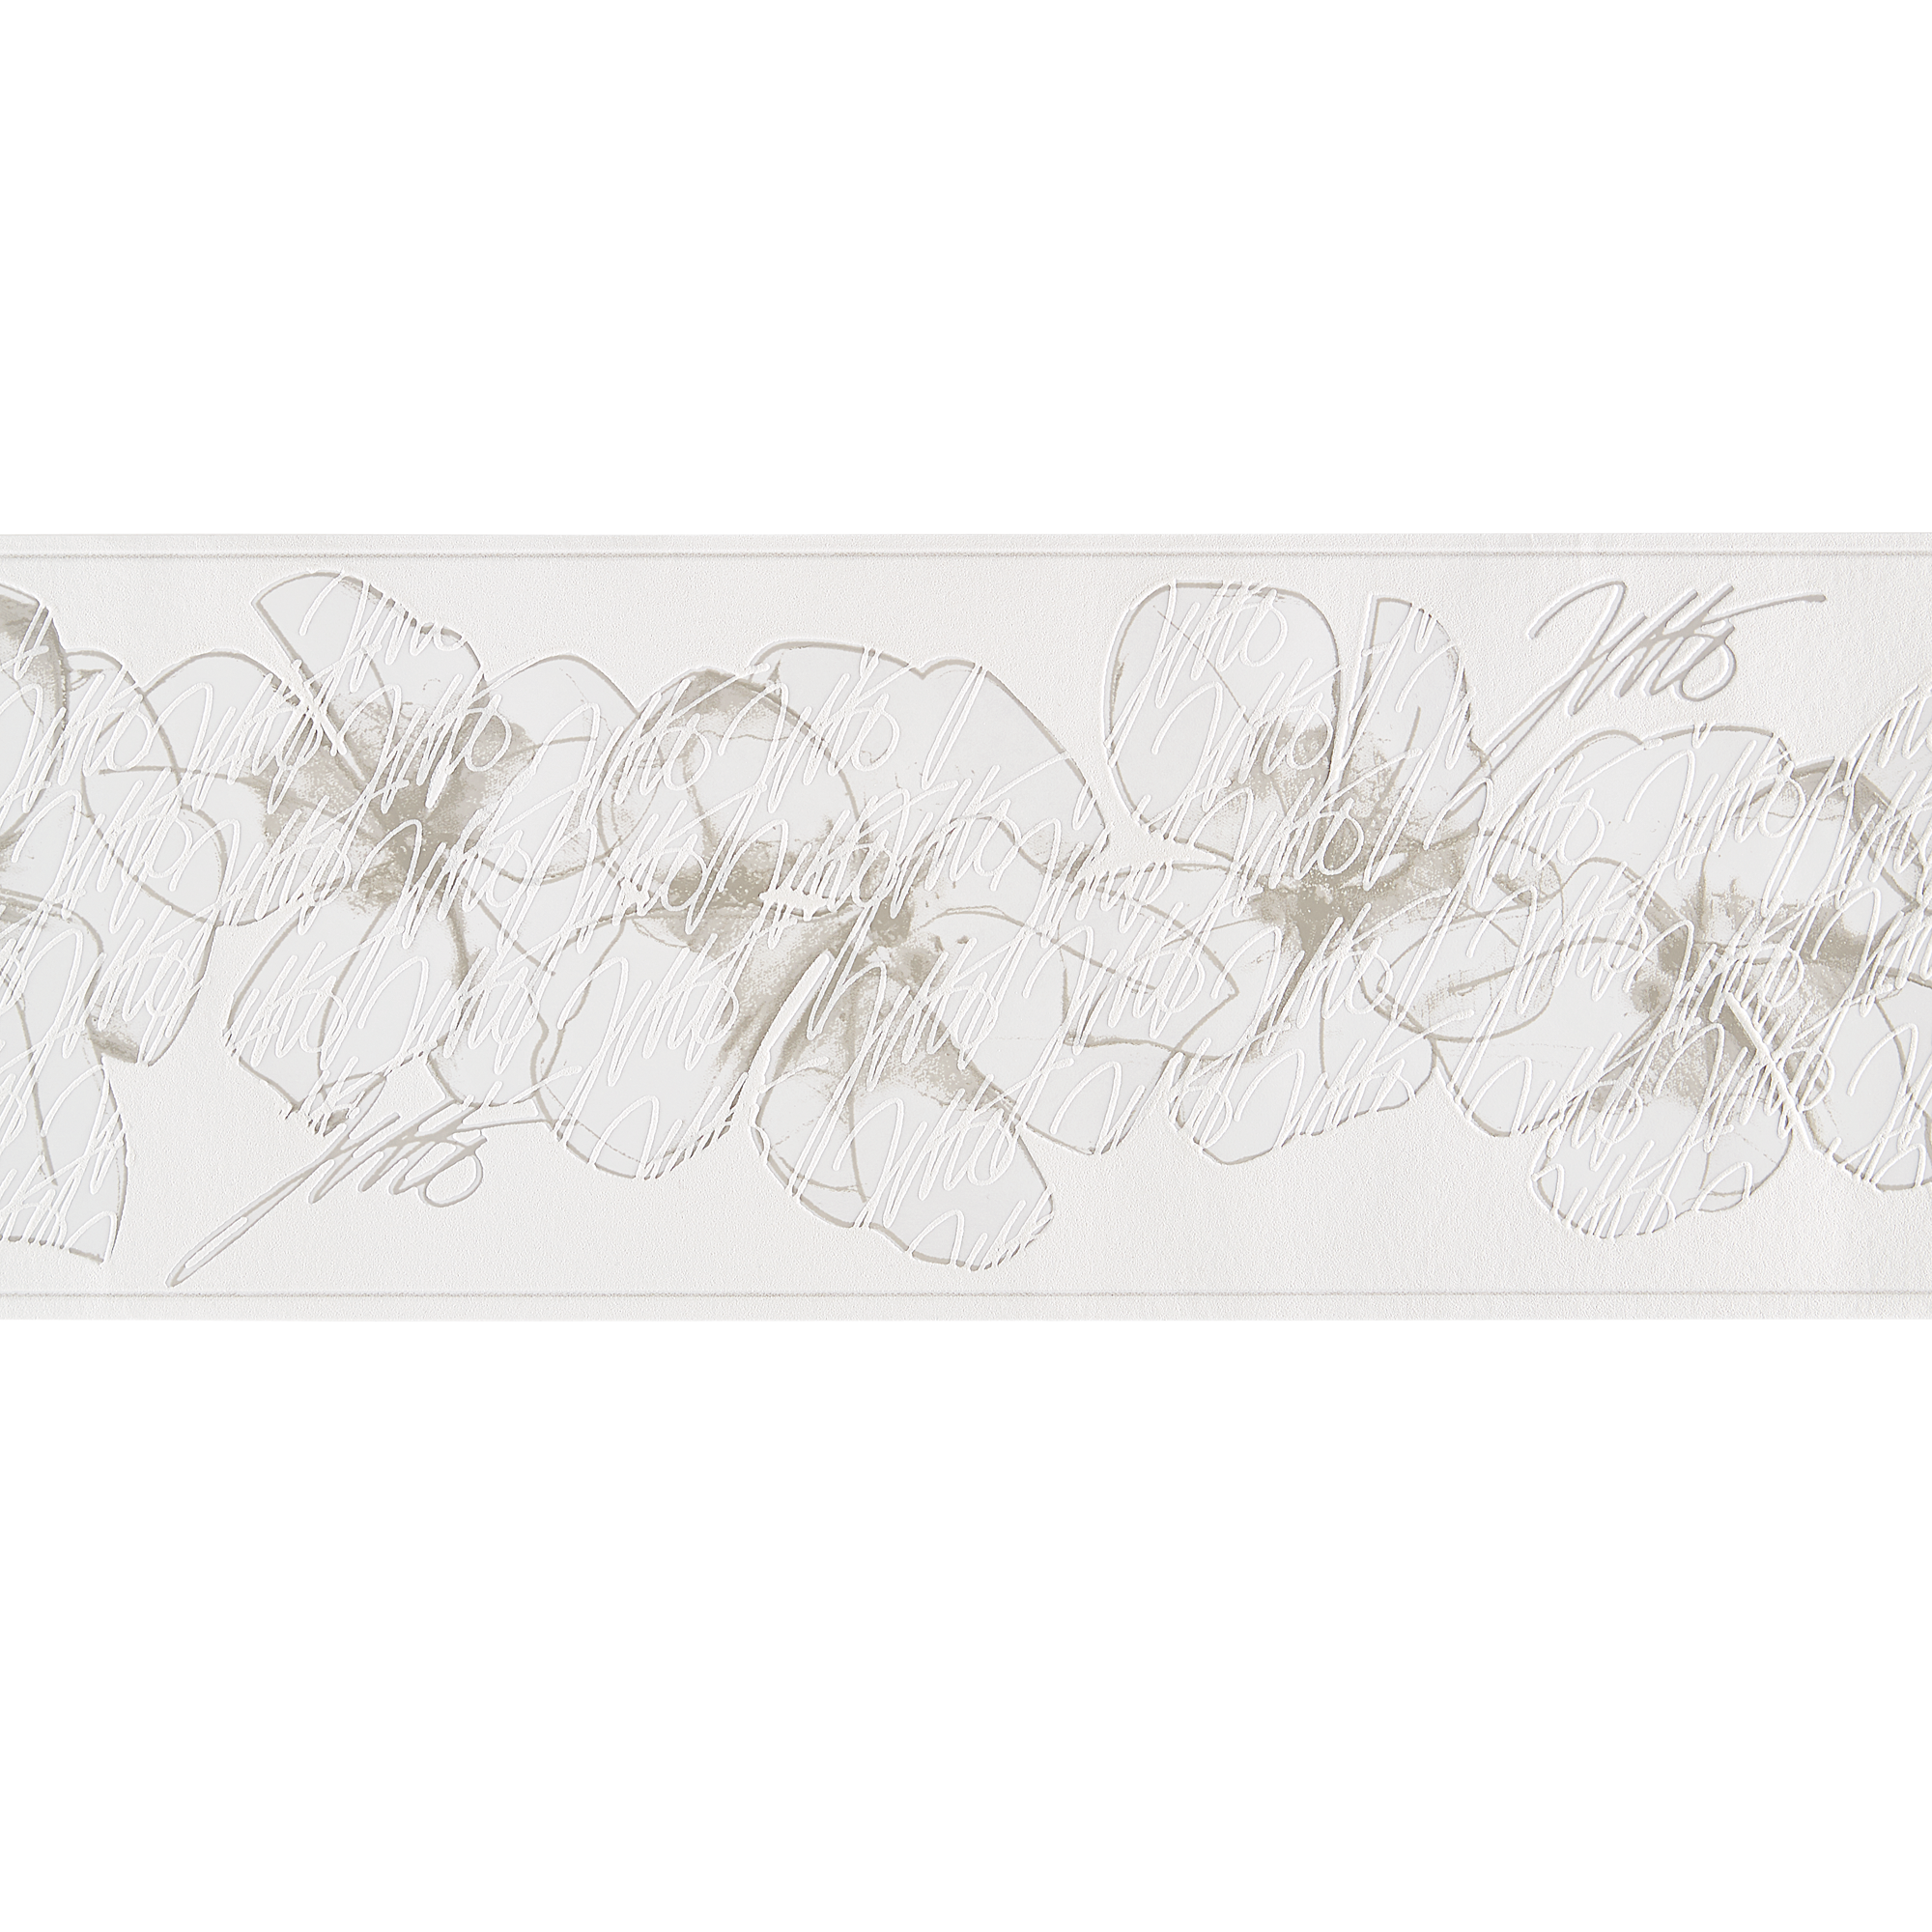 Vliesbordüre "Jette 3" Blumen grau/weiß 5 x 0,17 m + product picture